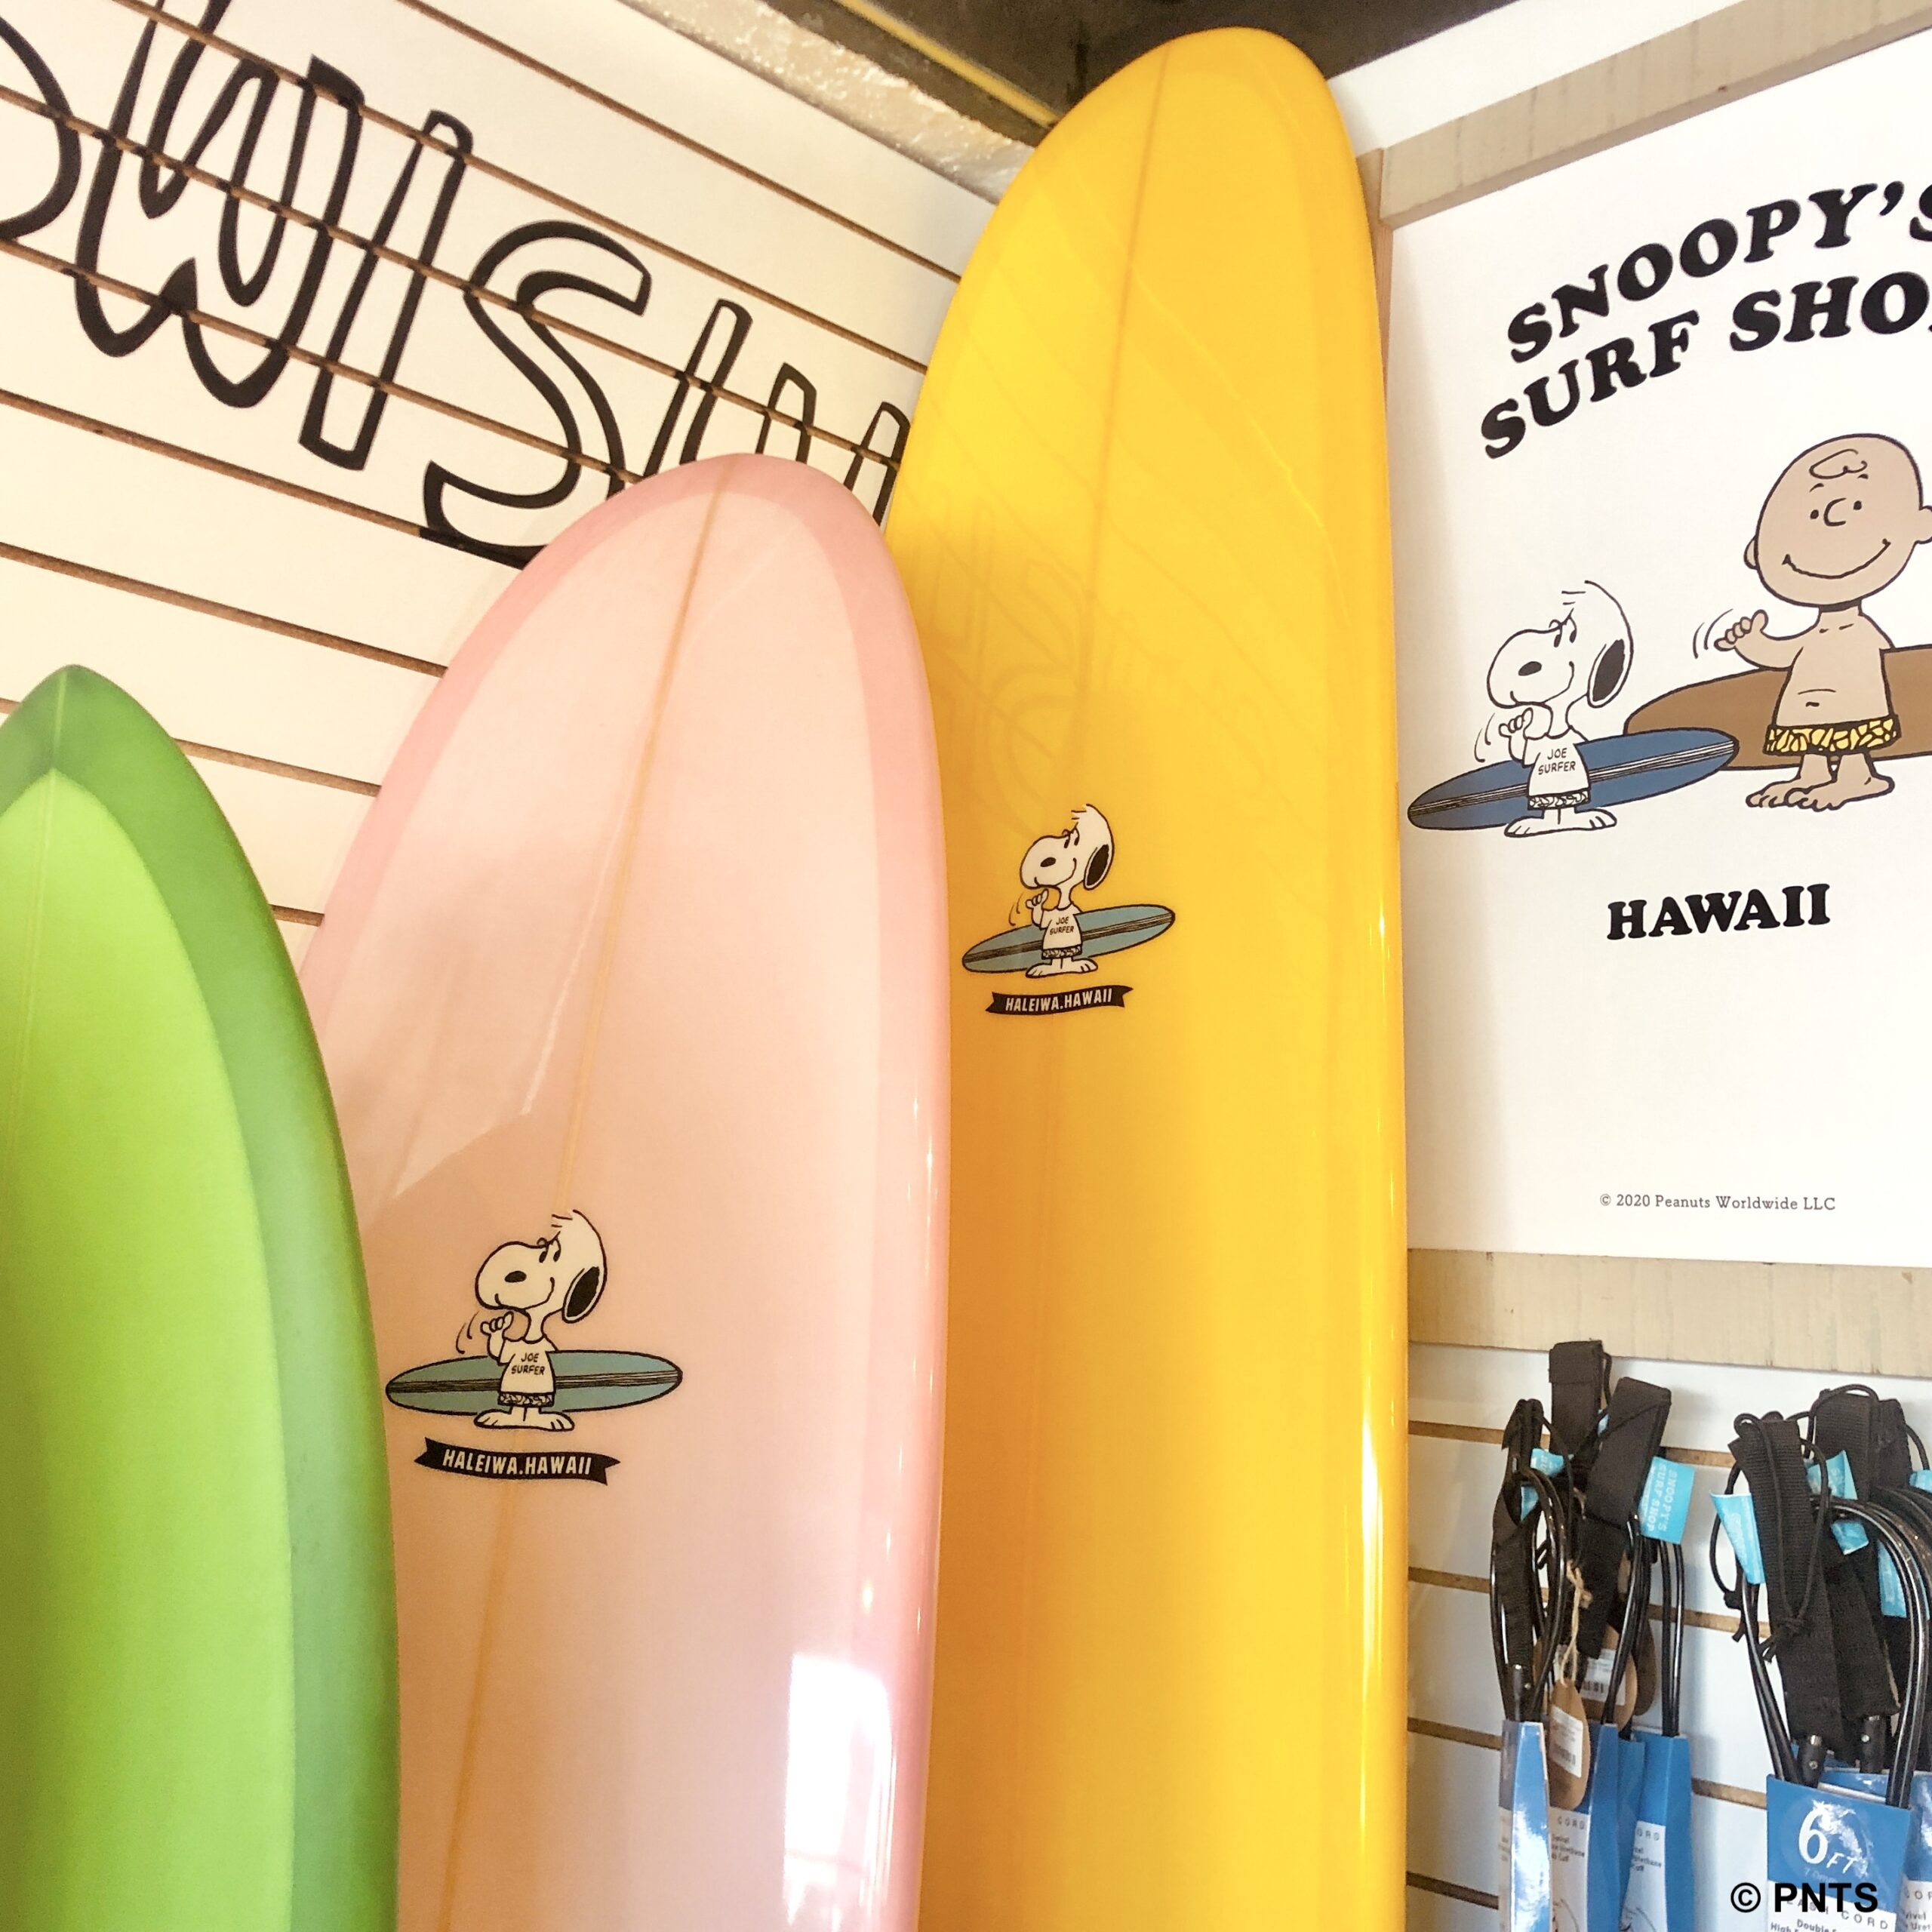 SNOOPYのロングボード | Snoopy's Surf Shop